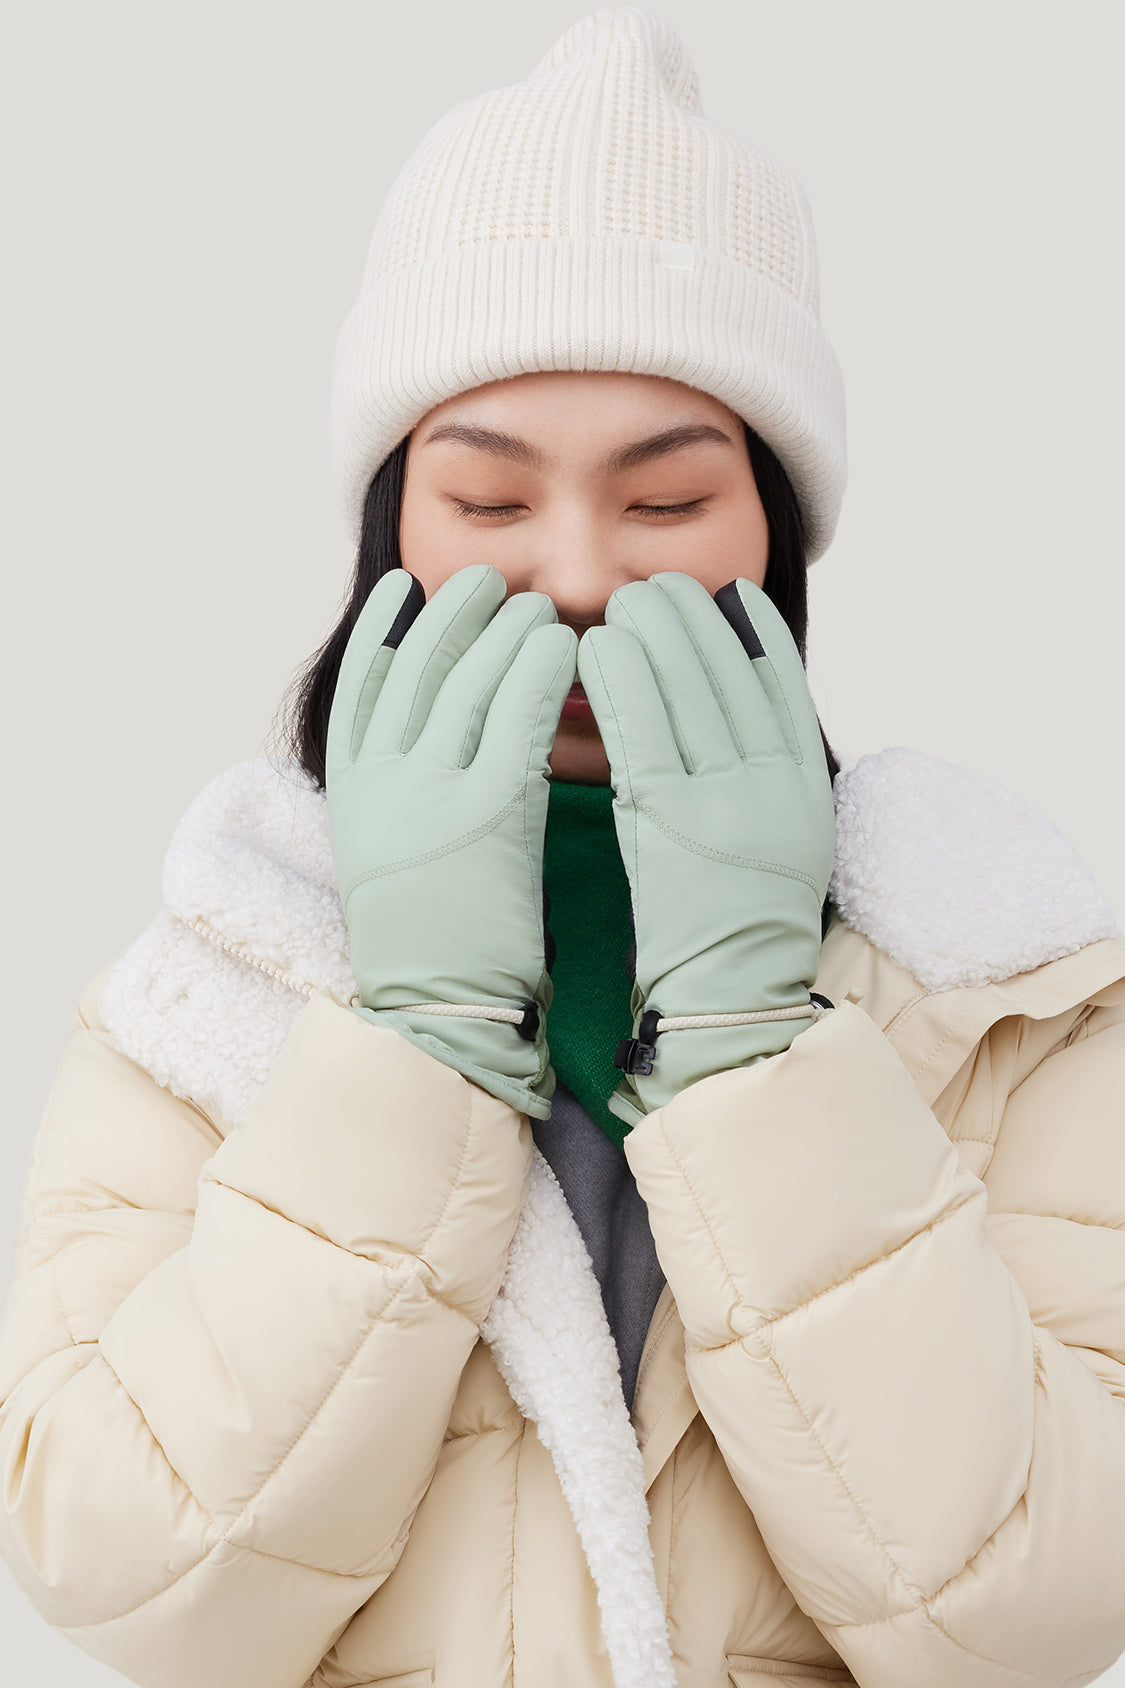 Beneunder Waterproof Winter Gloves, Women's Touch-Screen Warm